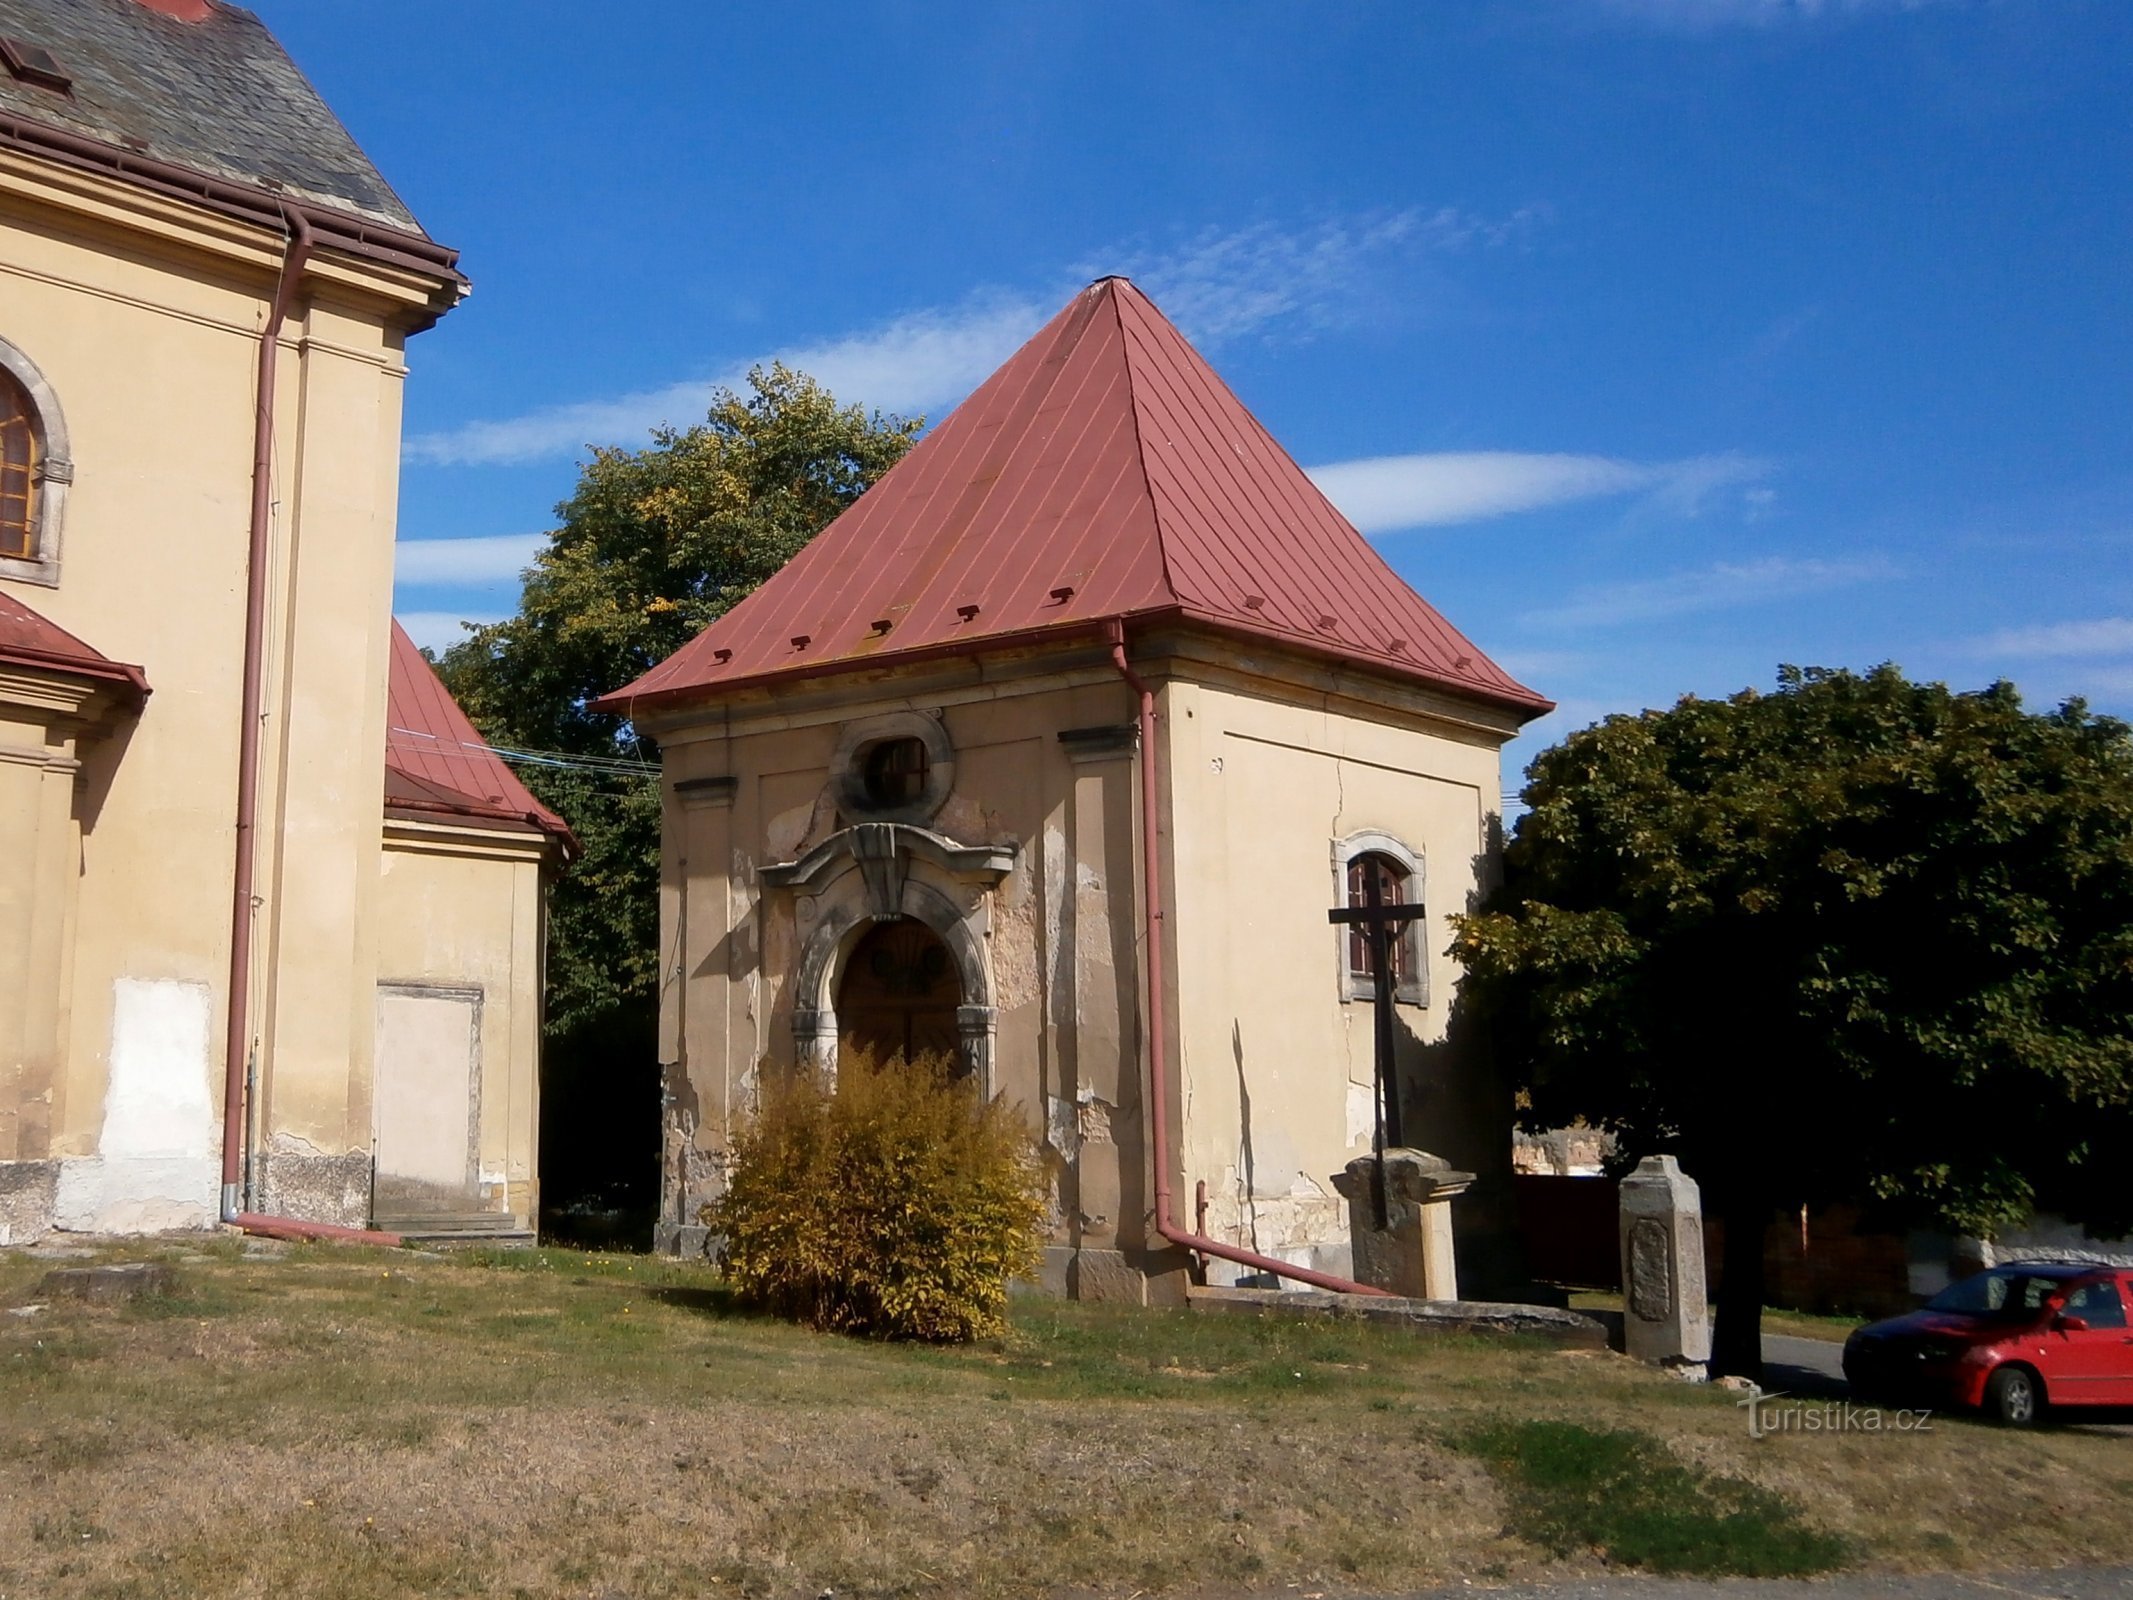 Kapel aan de kerk van St. Jiljí, abt (Chvalkovice)